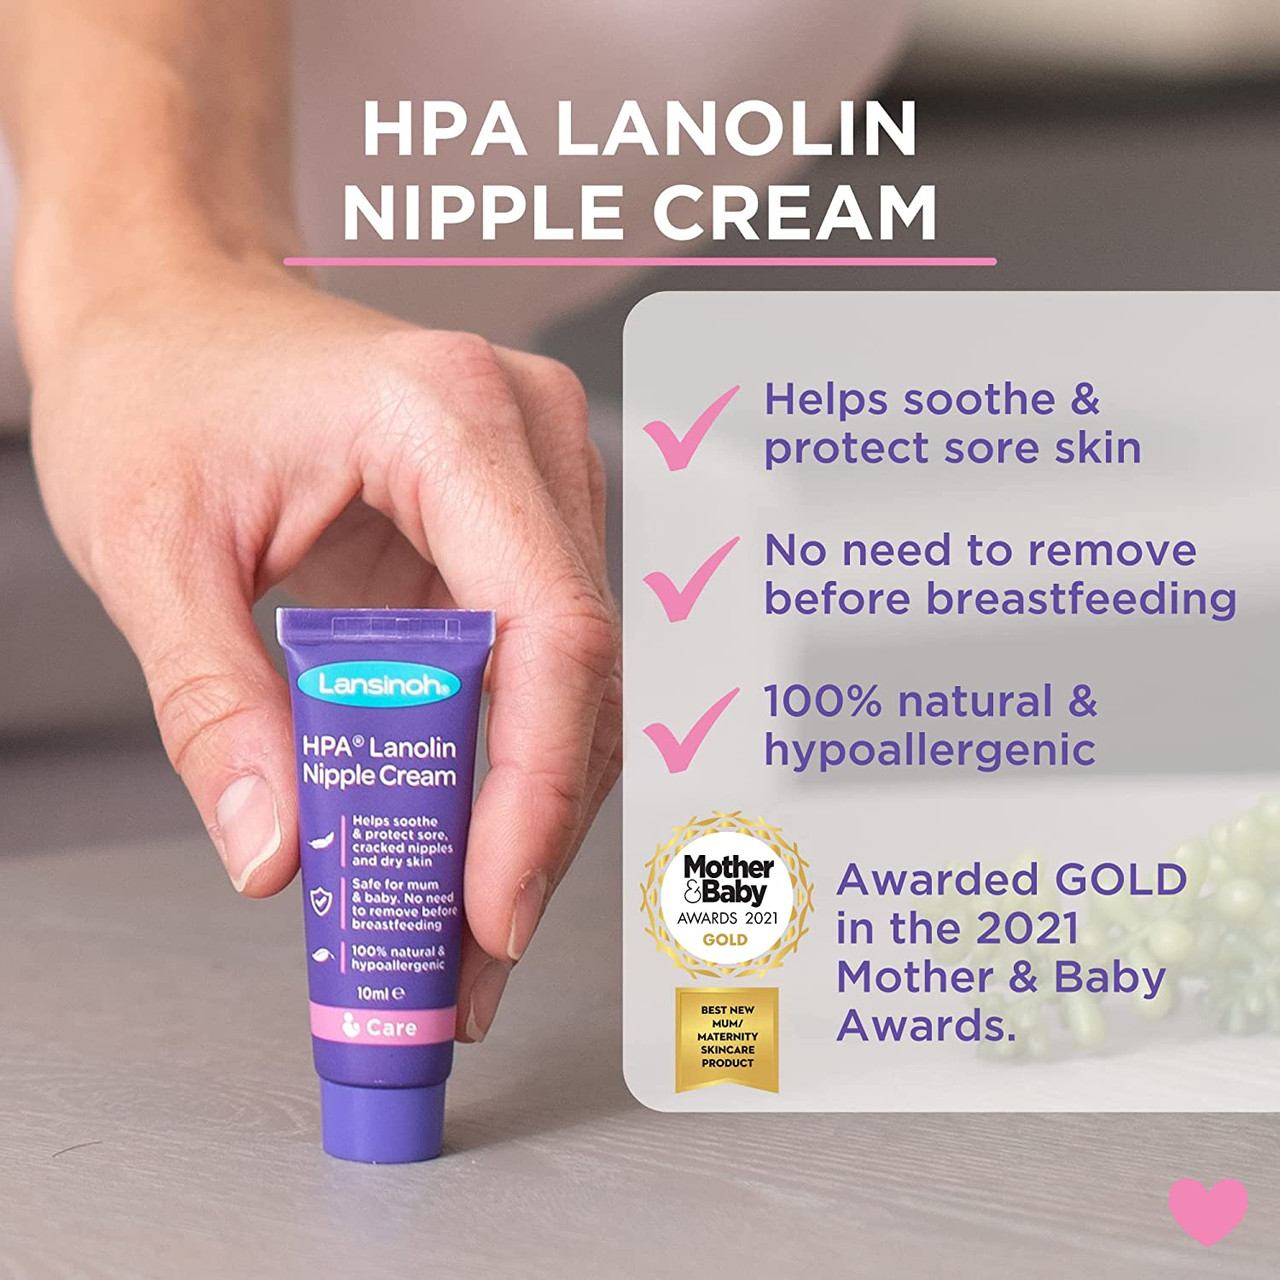 Moisturising Nipple Cream